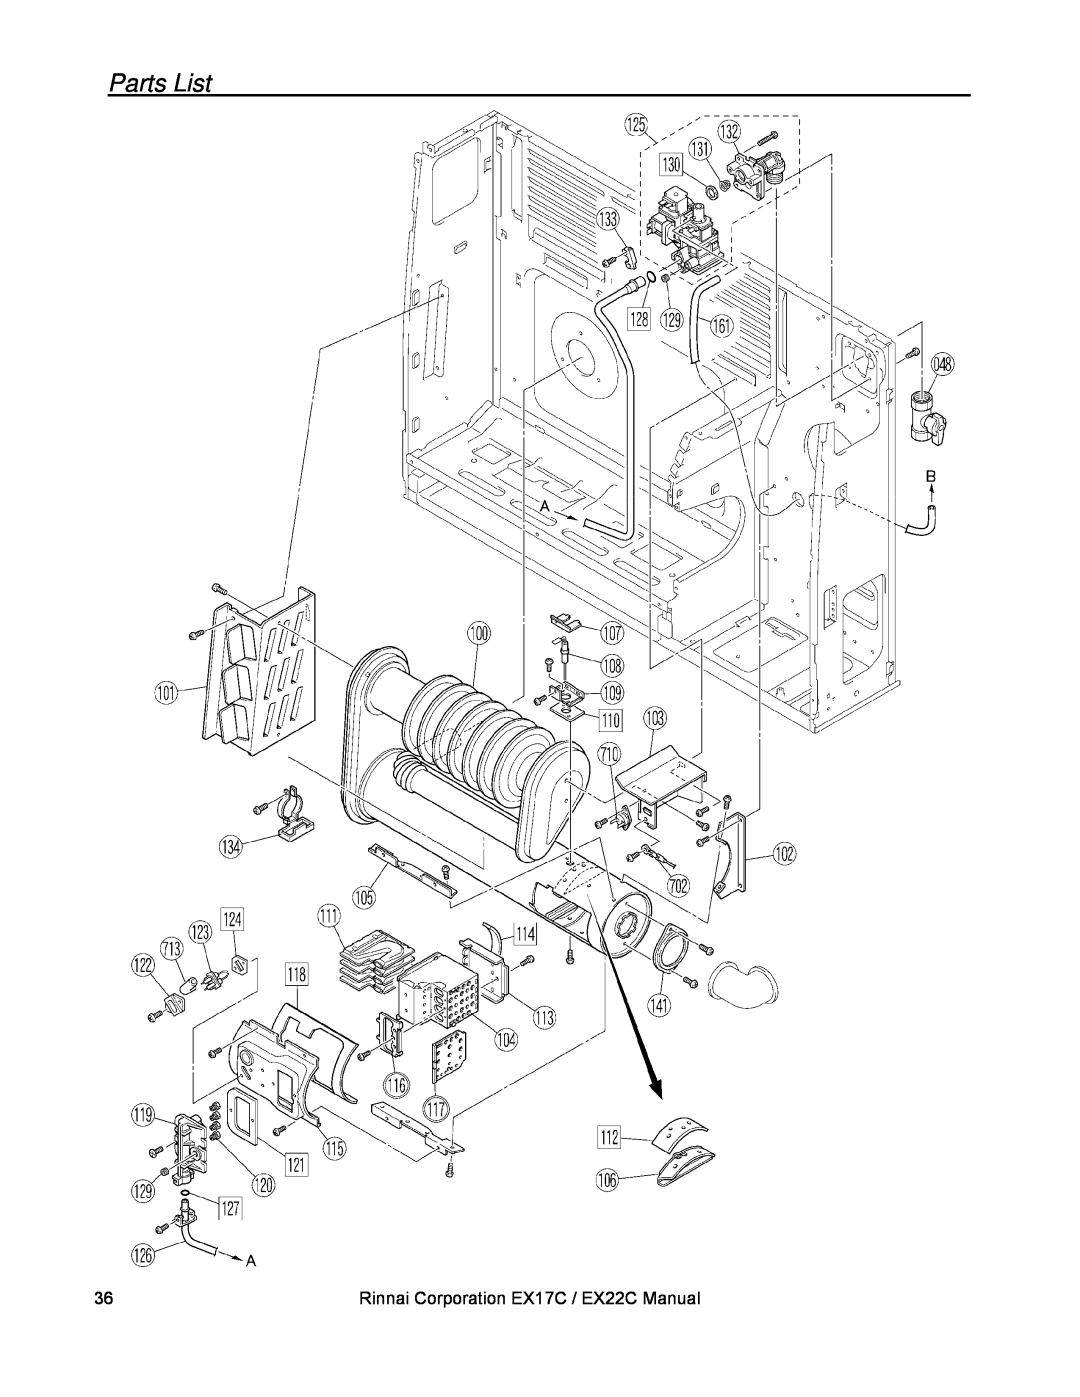 Rinnai installation manual Parts List, Rinnai Corporation EX17C / EX22C Manual 